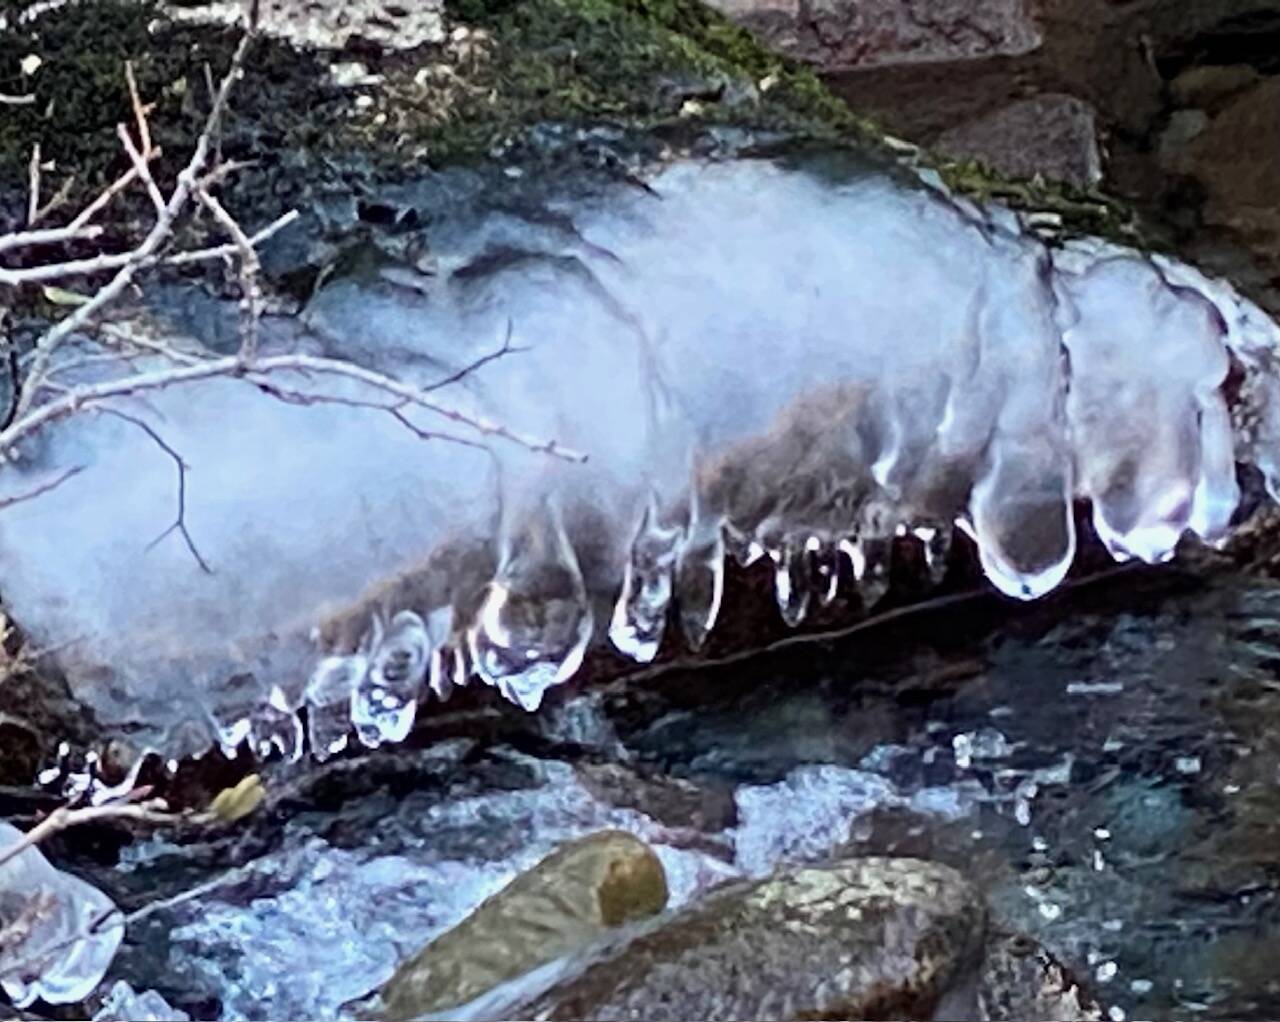 Frozen fingers of ice in Gold Creek seen on Oct. 25. (Photo by Denise Carroll)